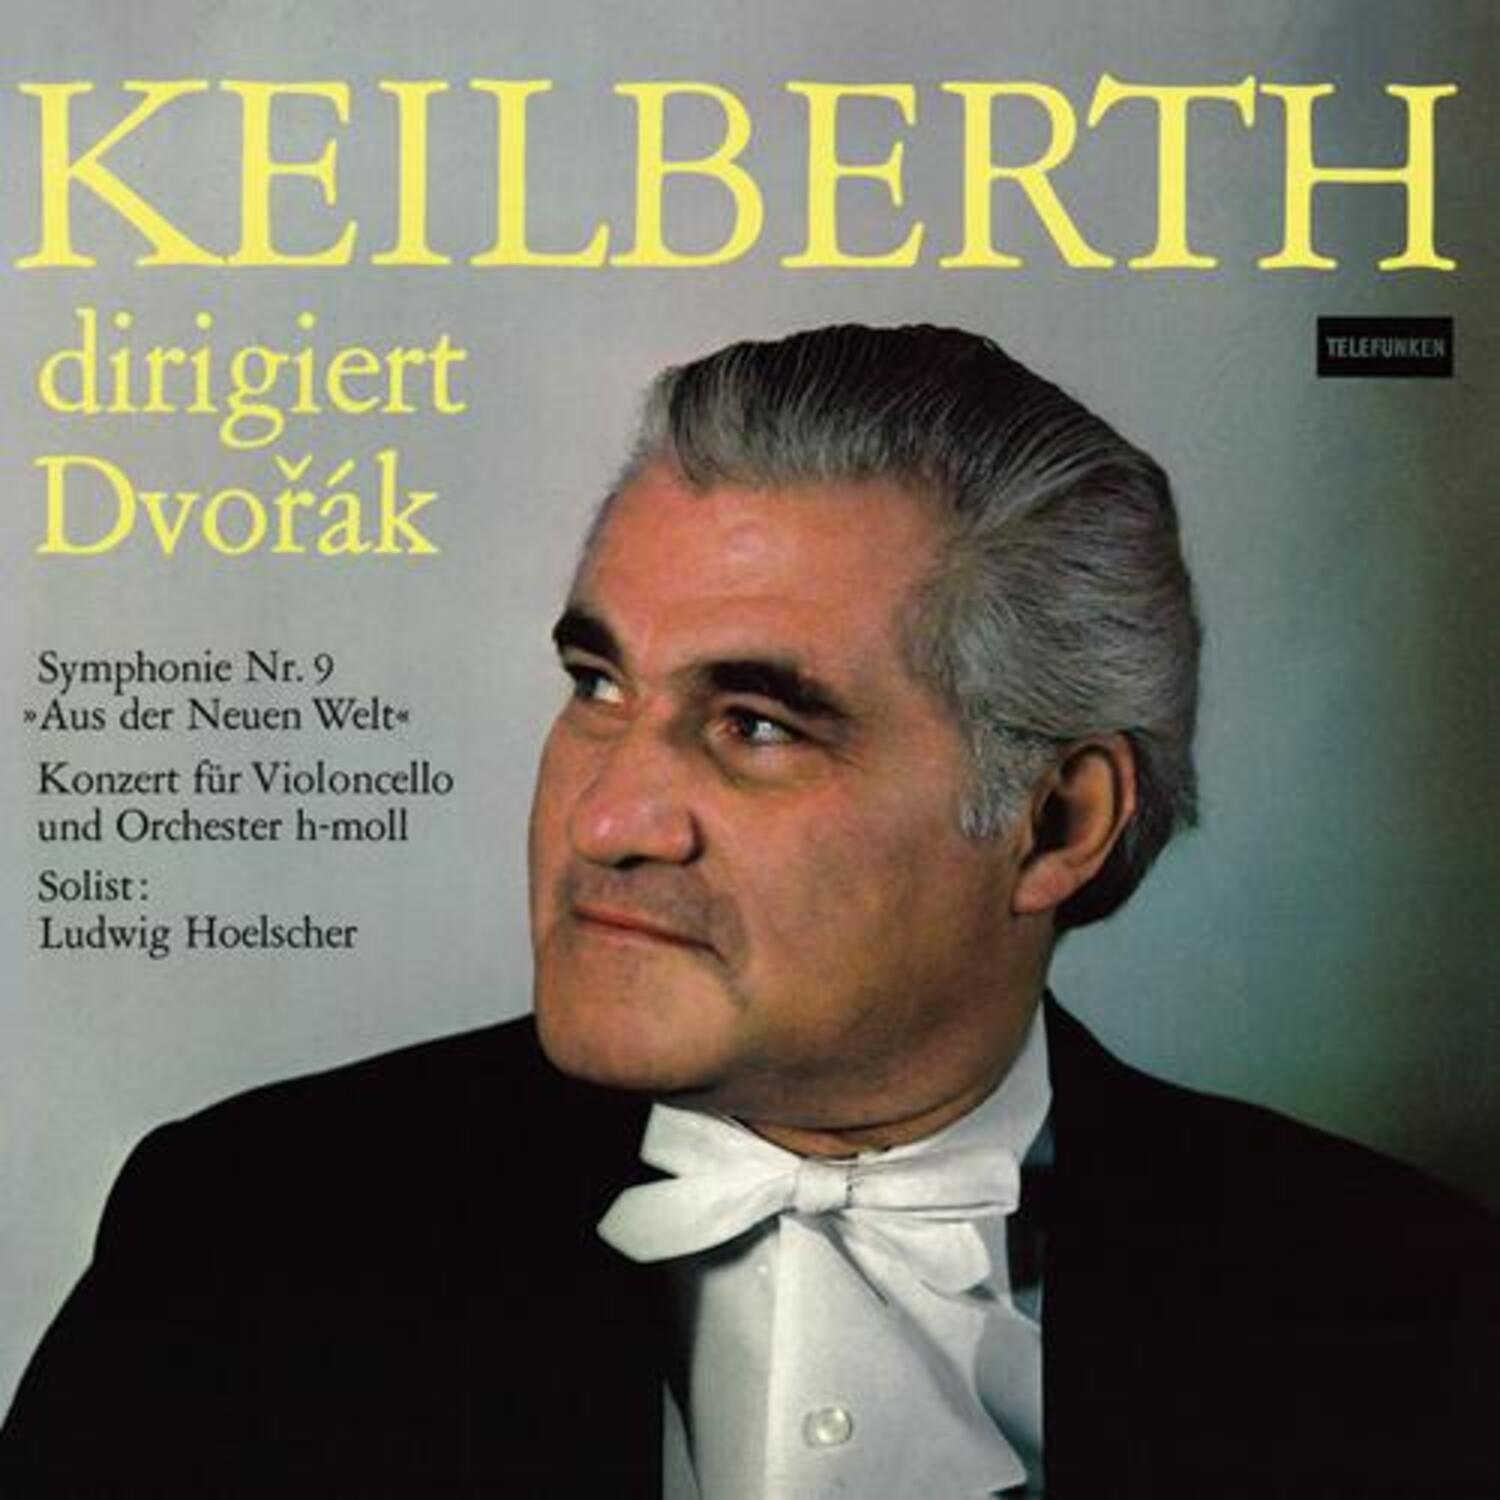 Joseph keilberth dirigiert Dvorak (요셉 카일베르트) : SYMPHONY NO.9 (드보르작 - 신세계 교향곡 &amp;  첼로 협주곡)